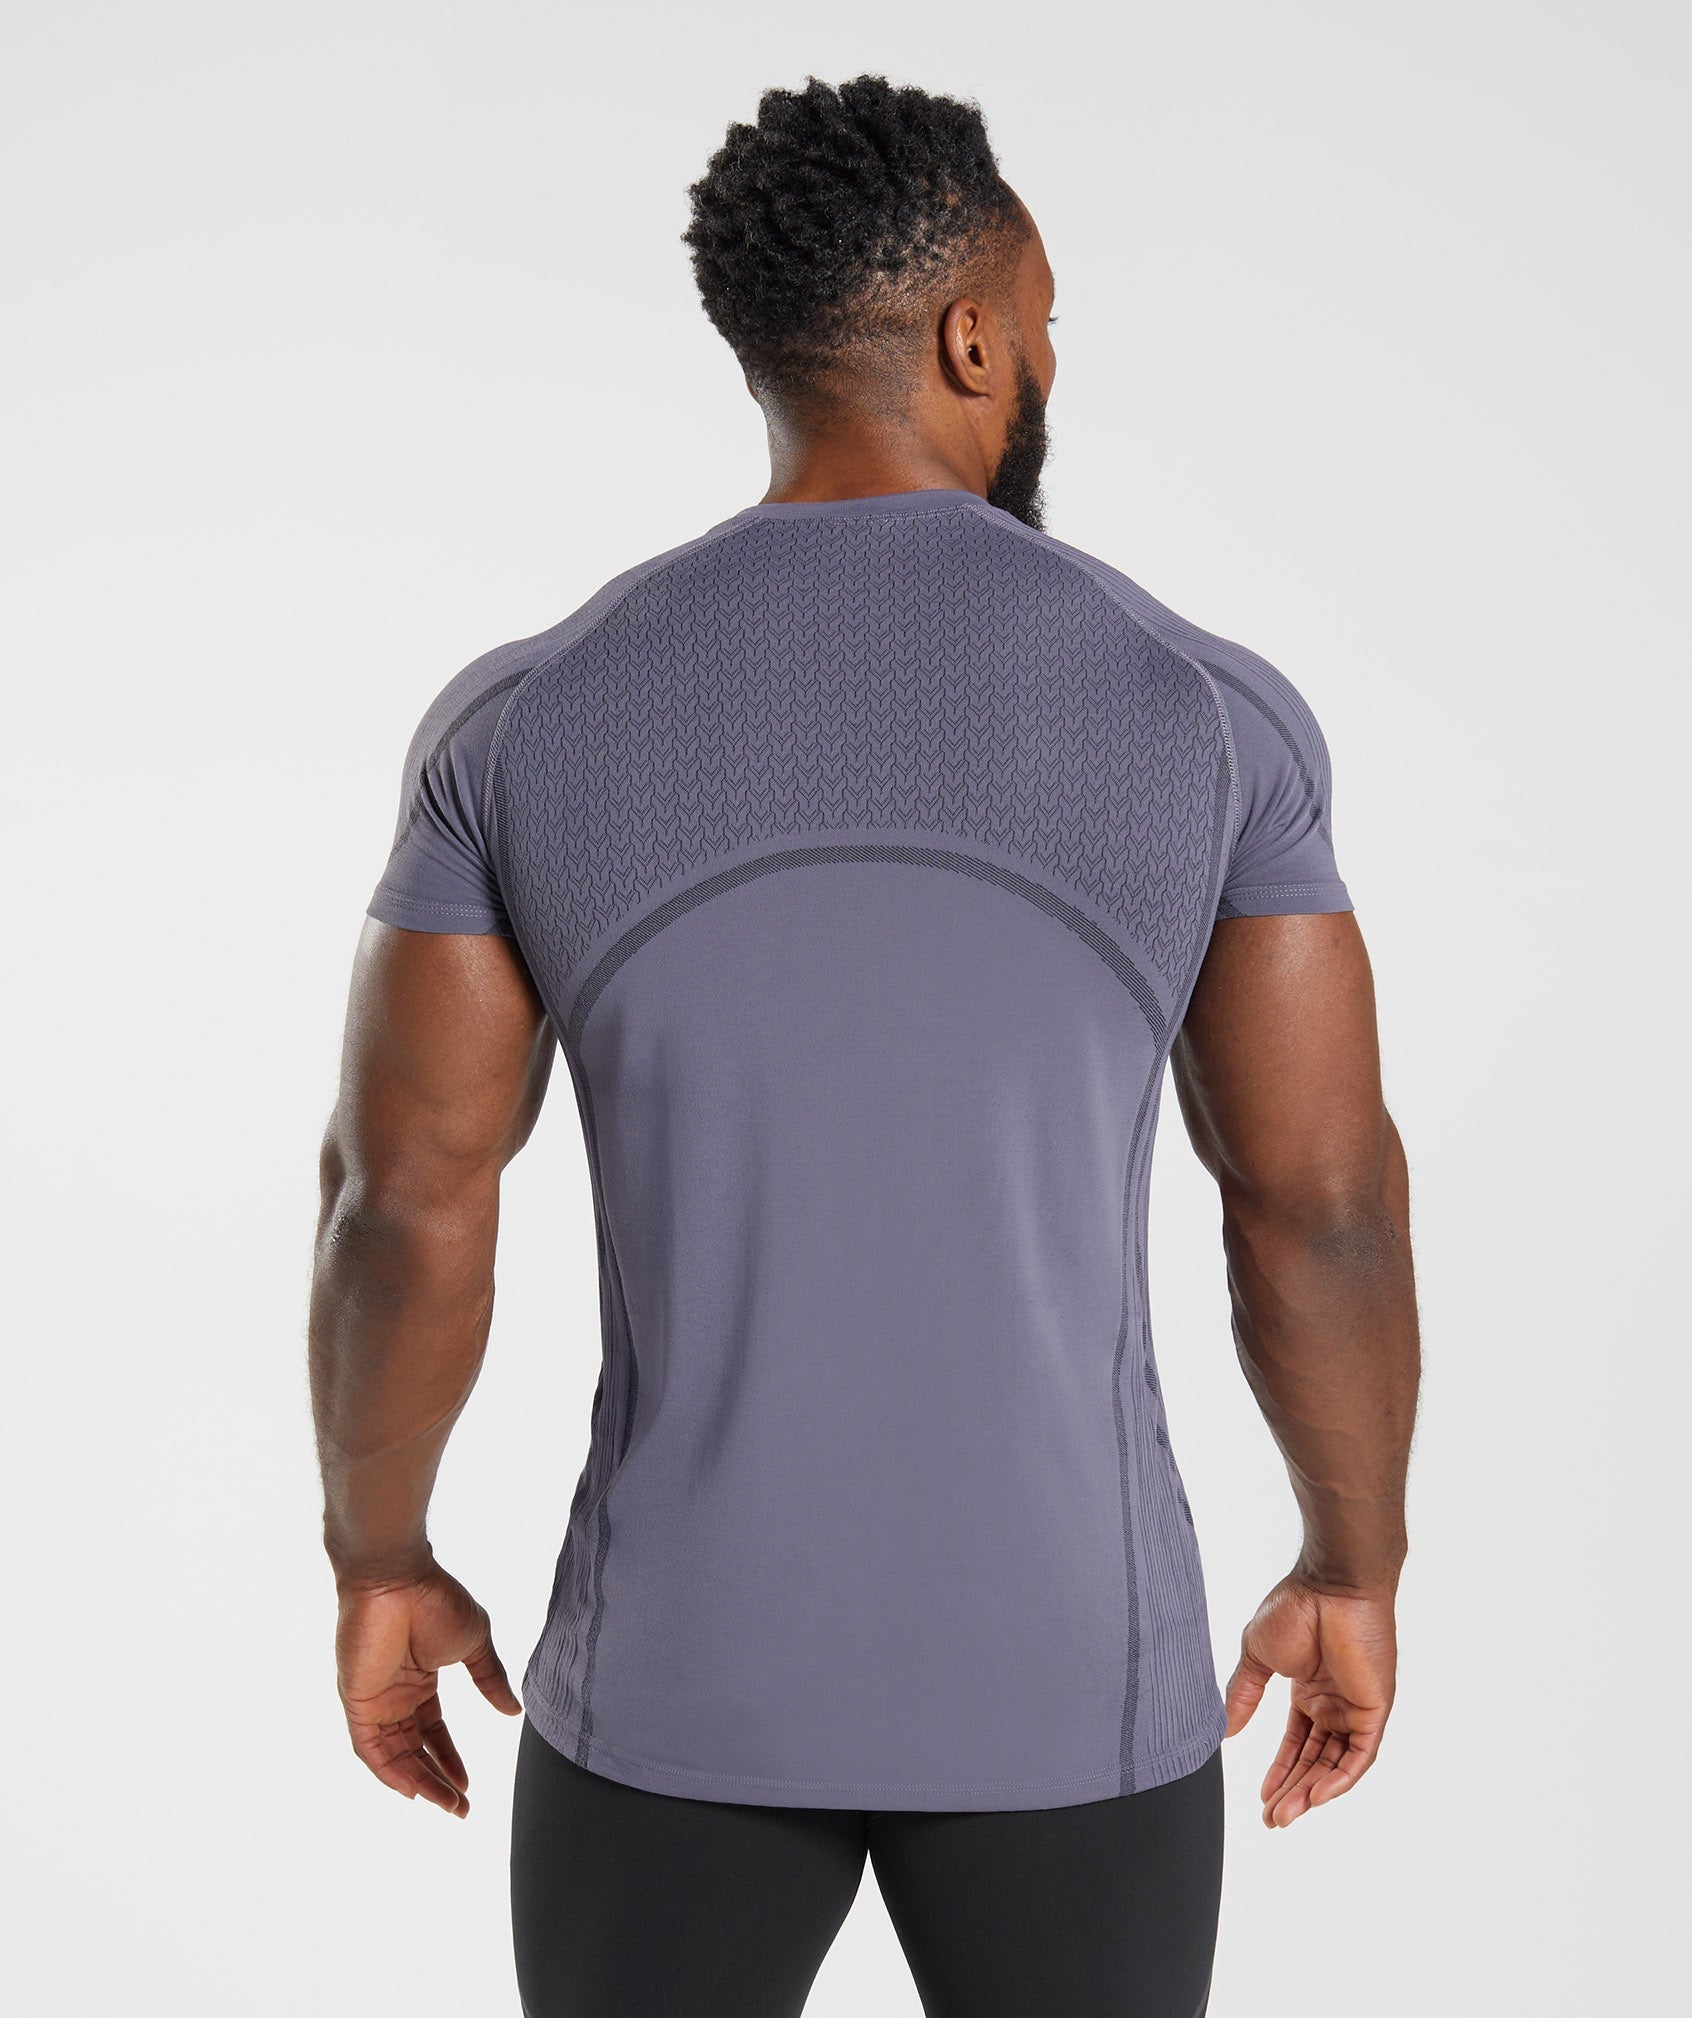 315 Seamless T-Shirt in Mercury Purple/Black